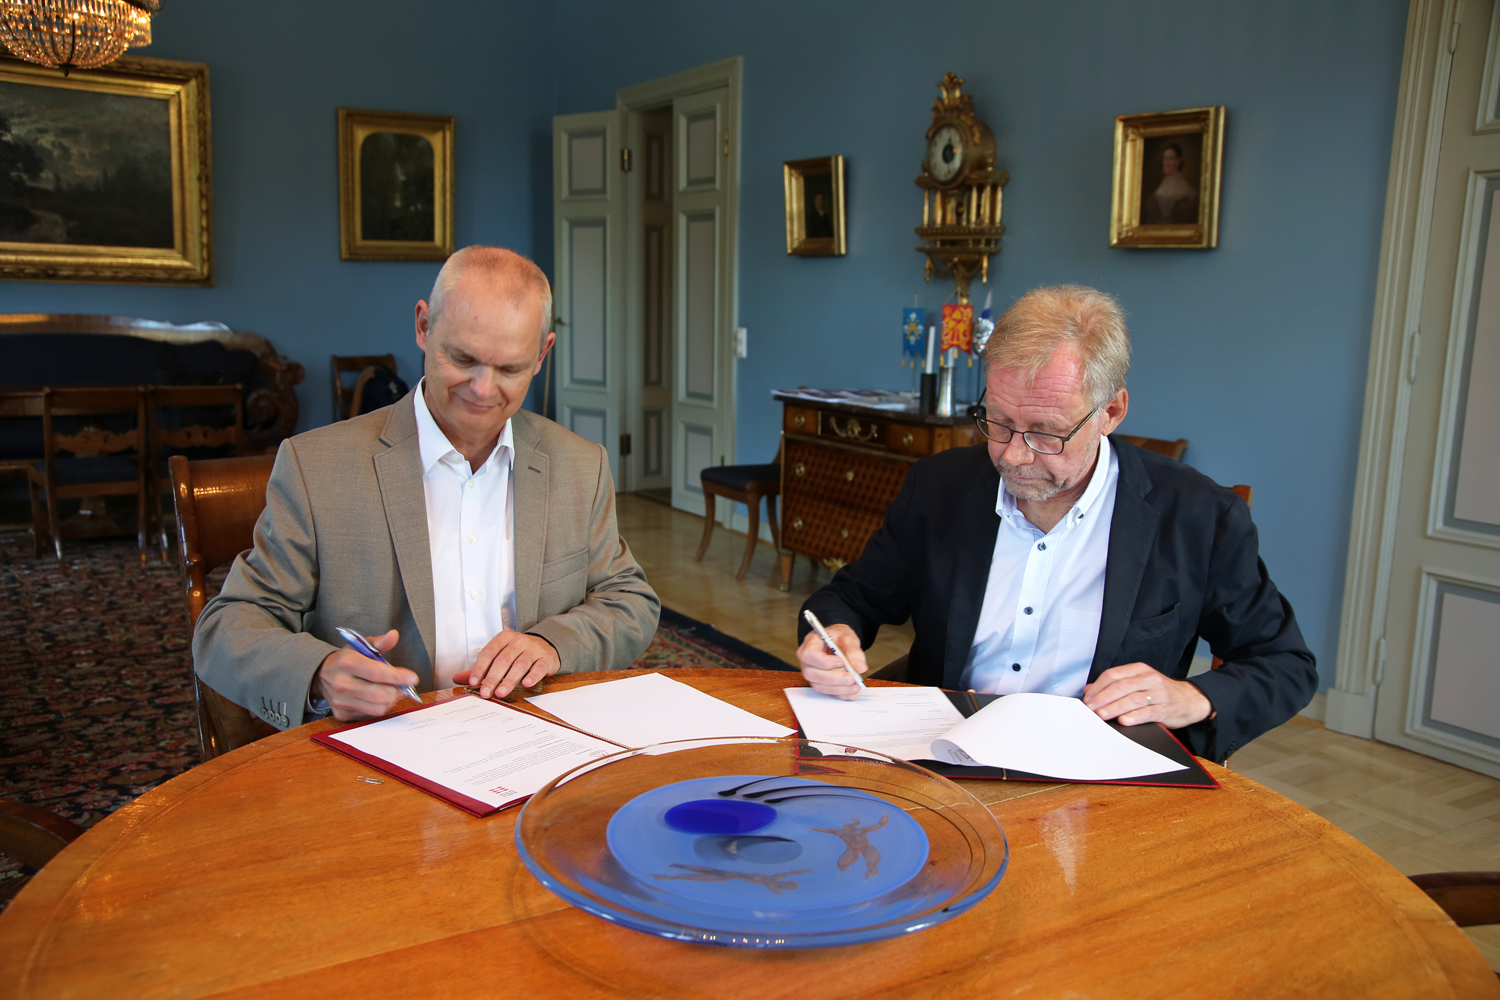 Kim Dam-Johansen signing the agreement with Mikko Hupa, Head of Åbo Academy